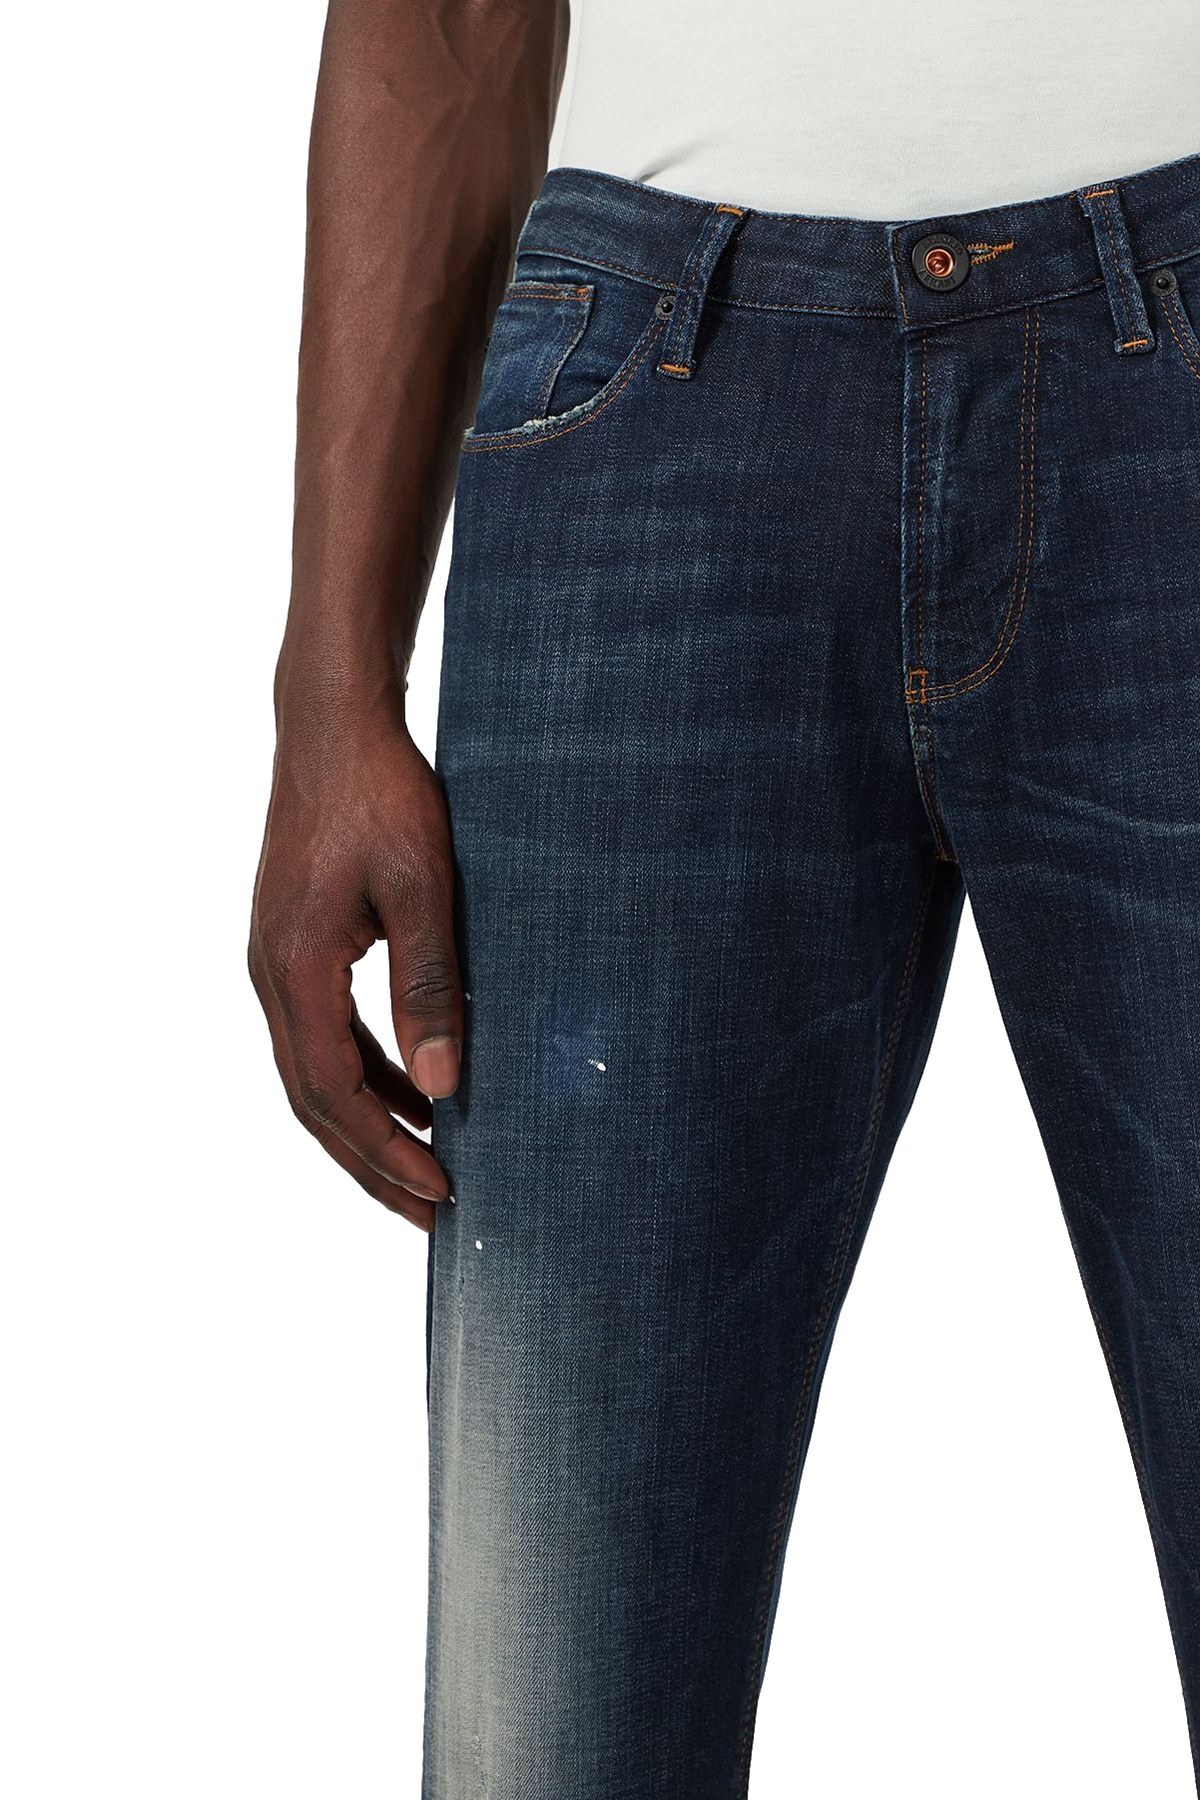 Emporio Armani Slim Fit Pamuklu J06 Jeans Erkek Kot Pantolon 3K1J06 1DY3Z 0942 LACİVERT